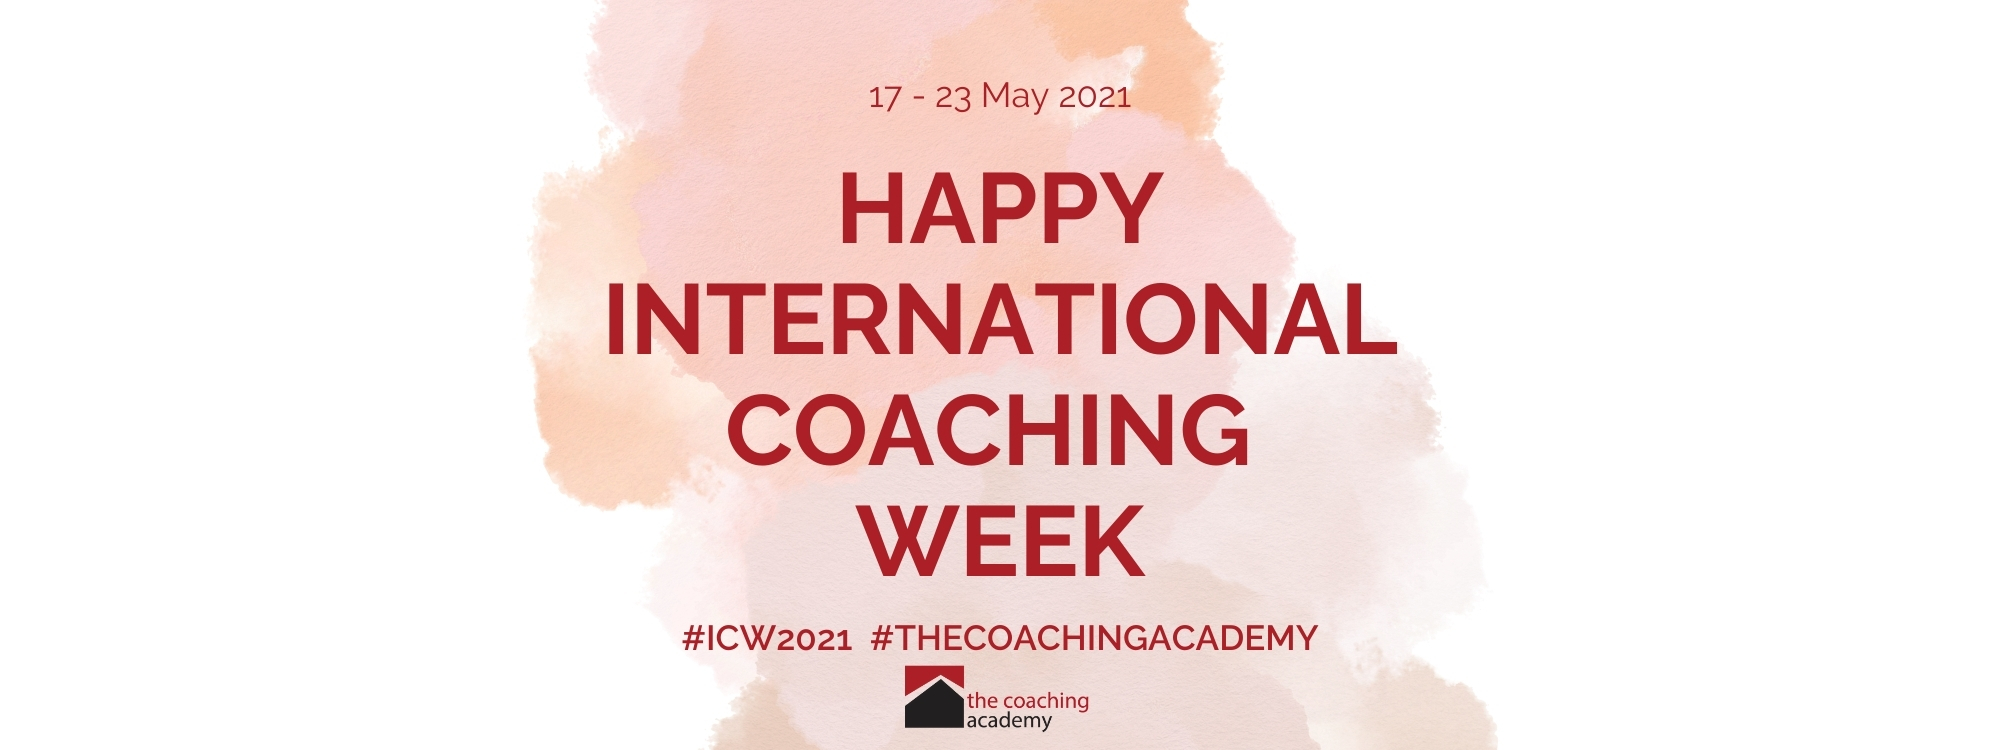 Happy International Coaching Week